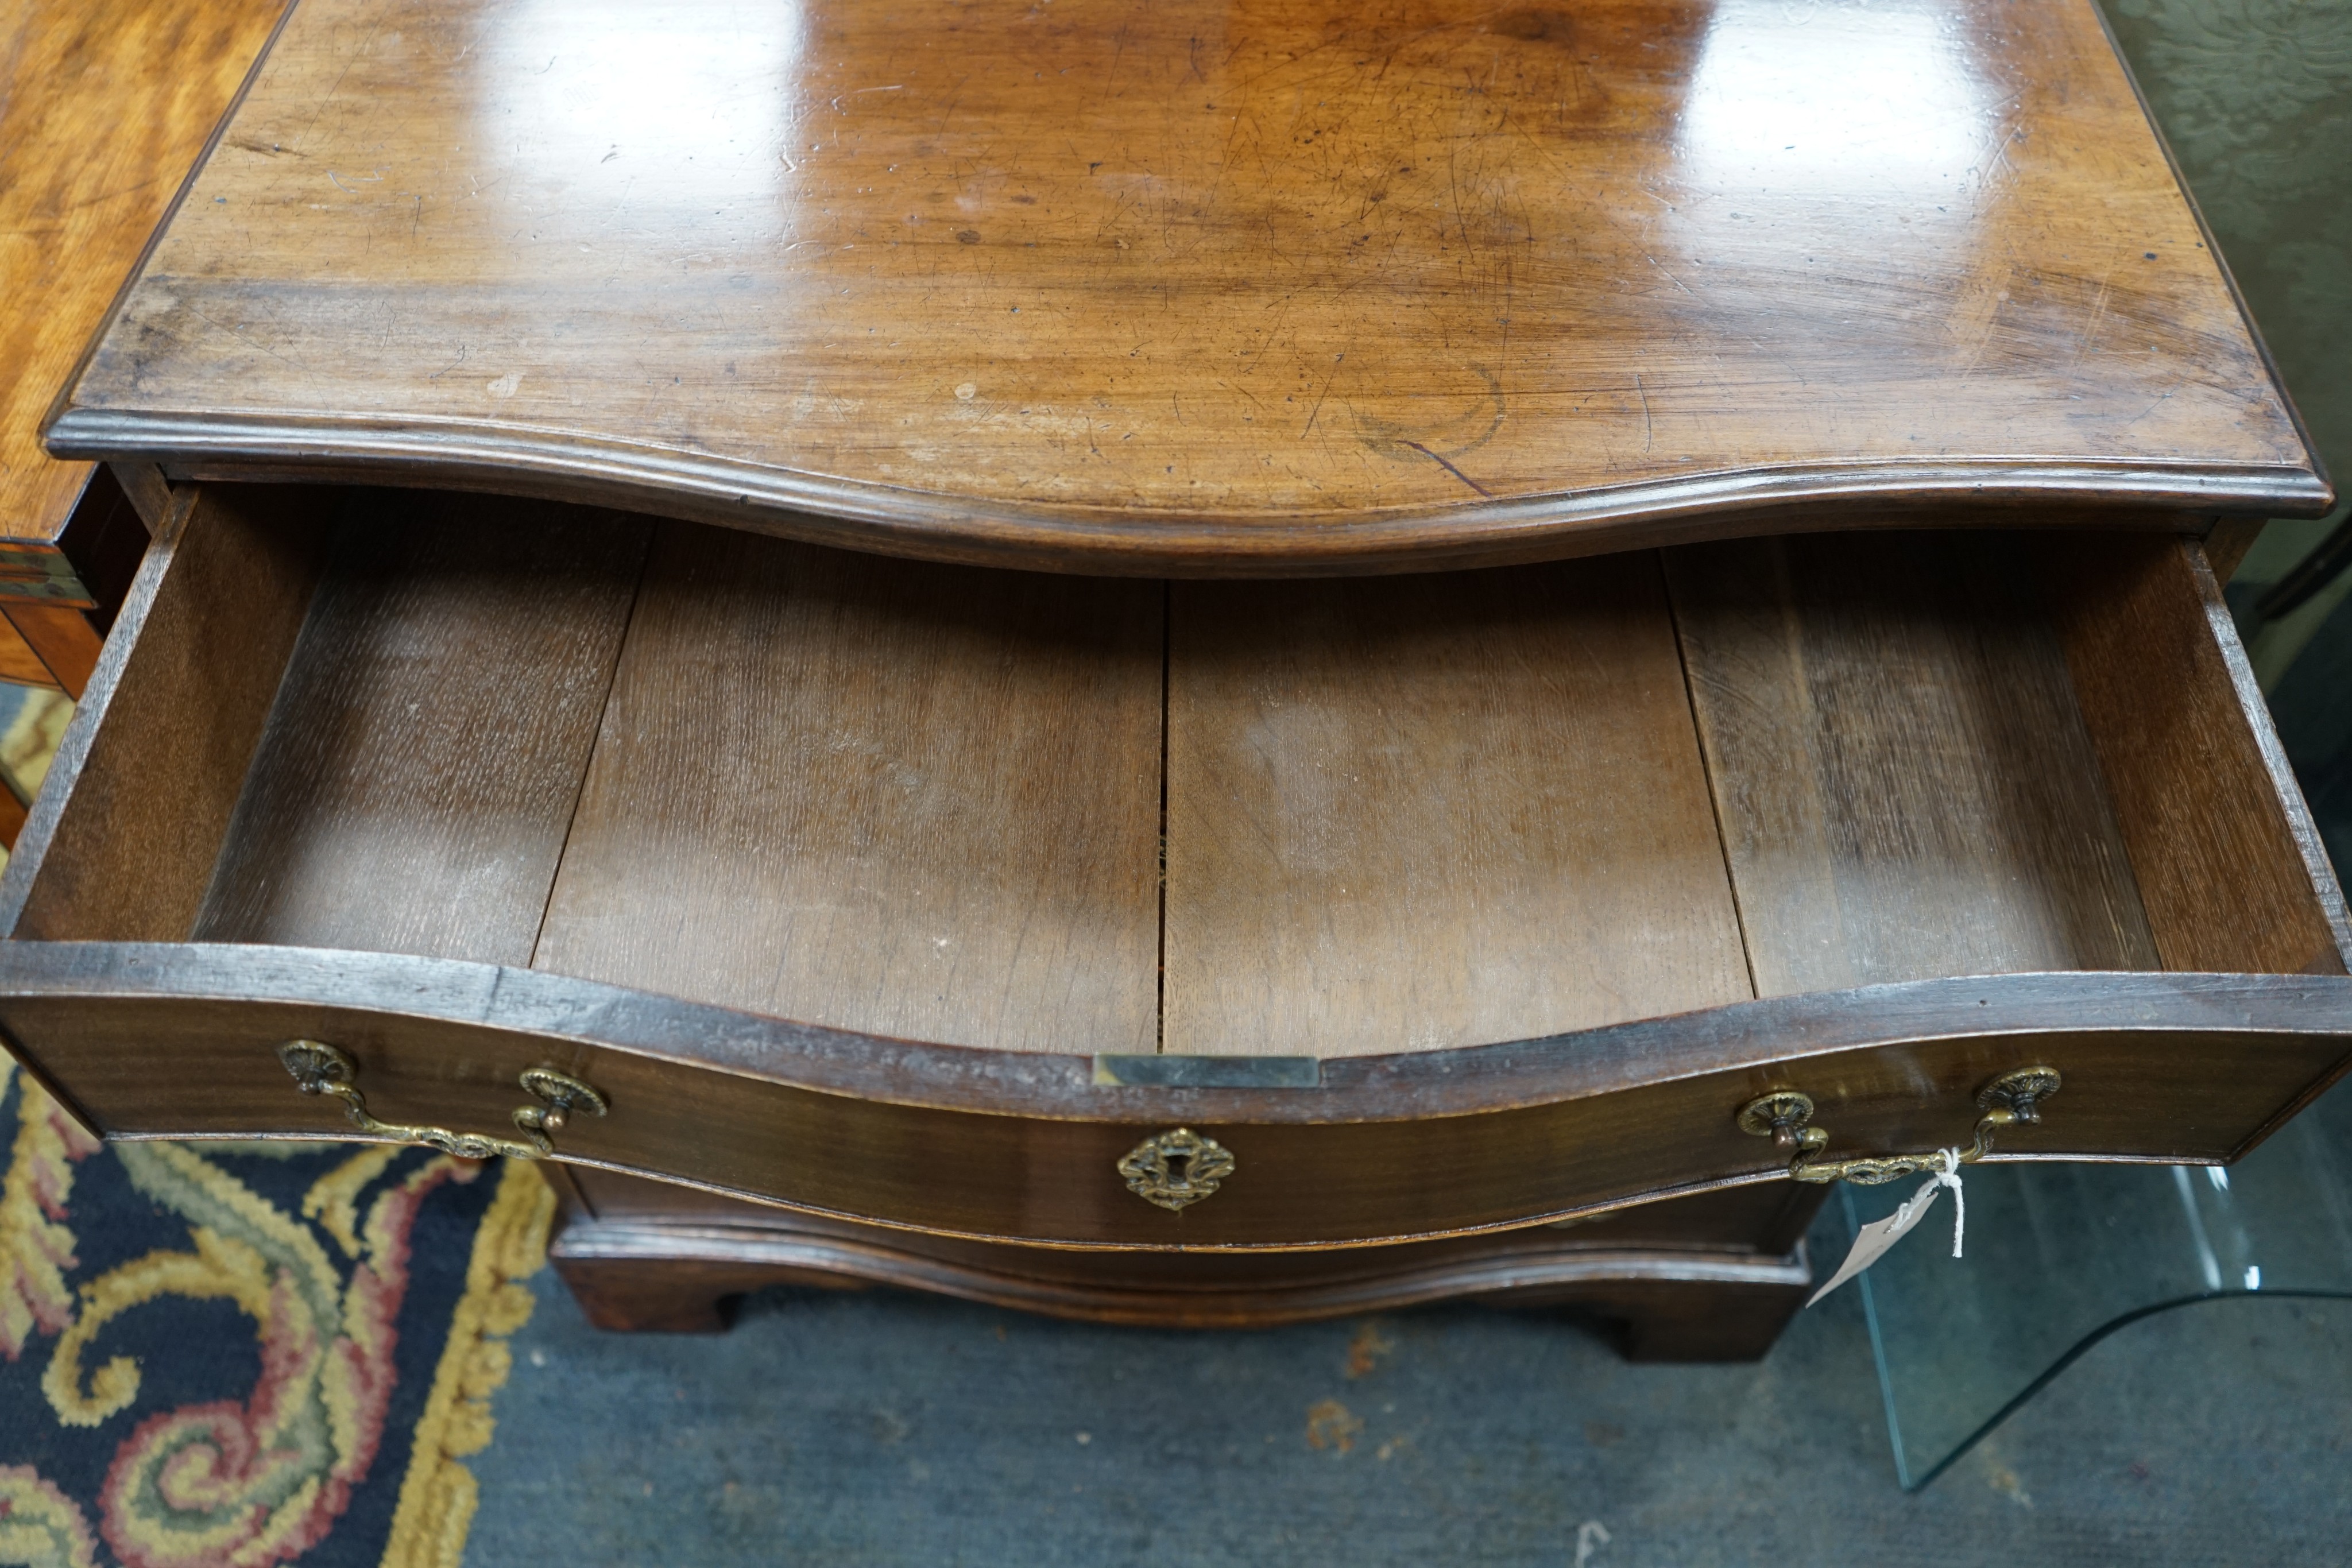 A George III mahogany four drawer serpentine chest, width 84cm, depth 49cm, height 86cm